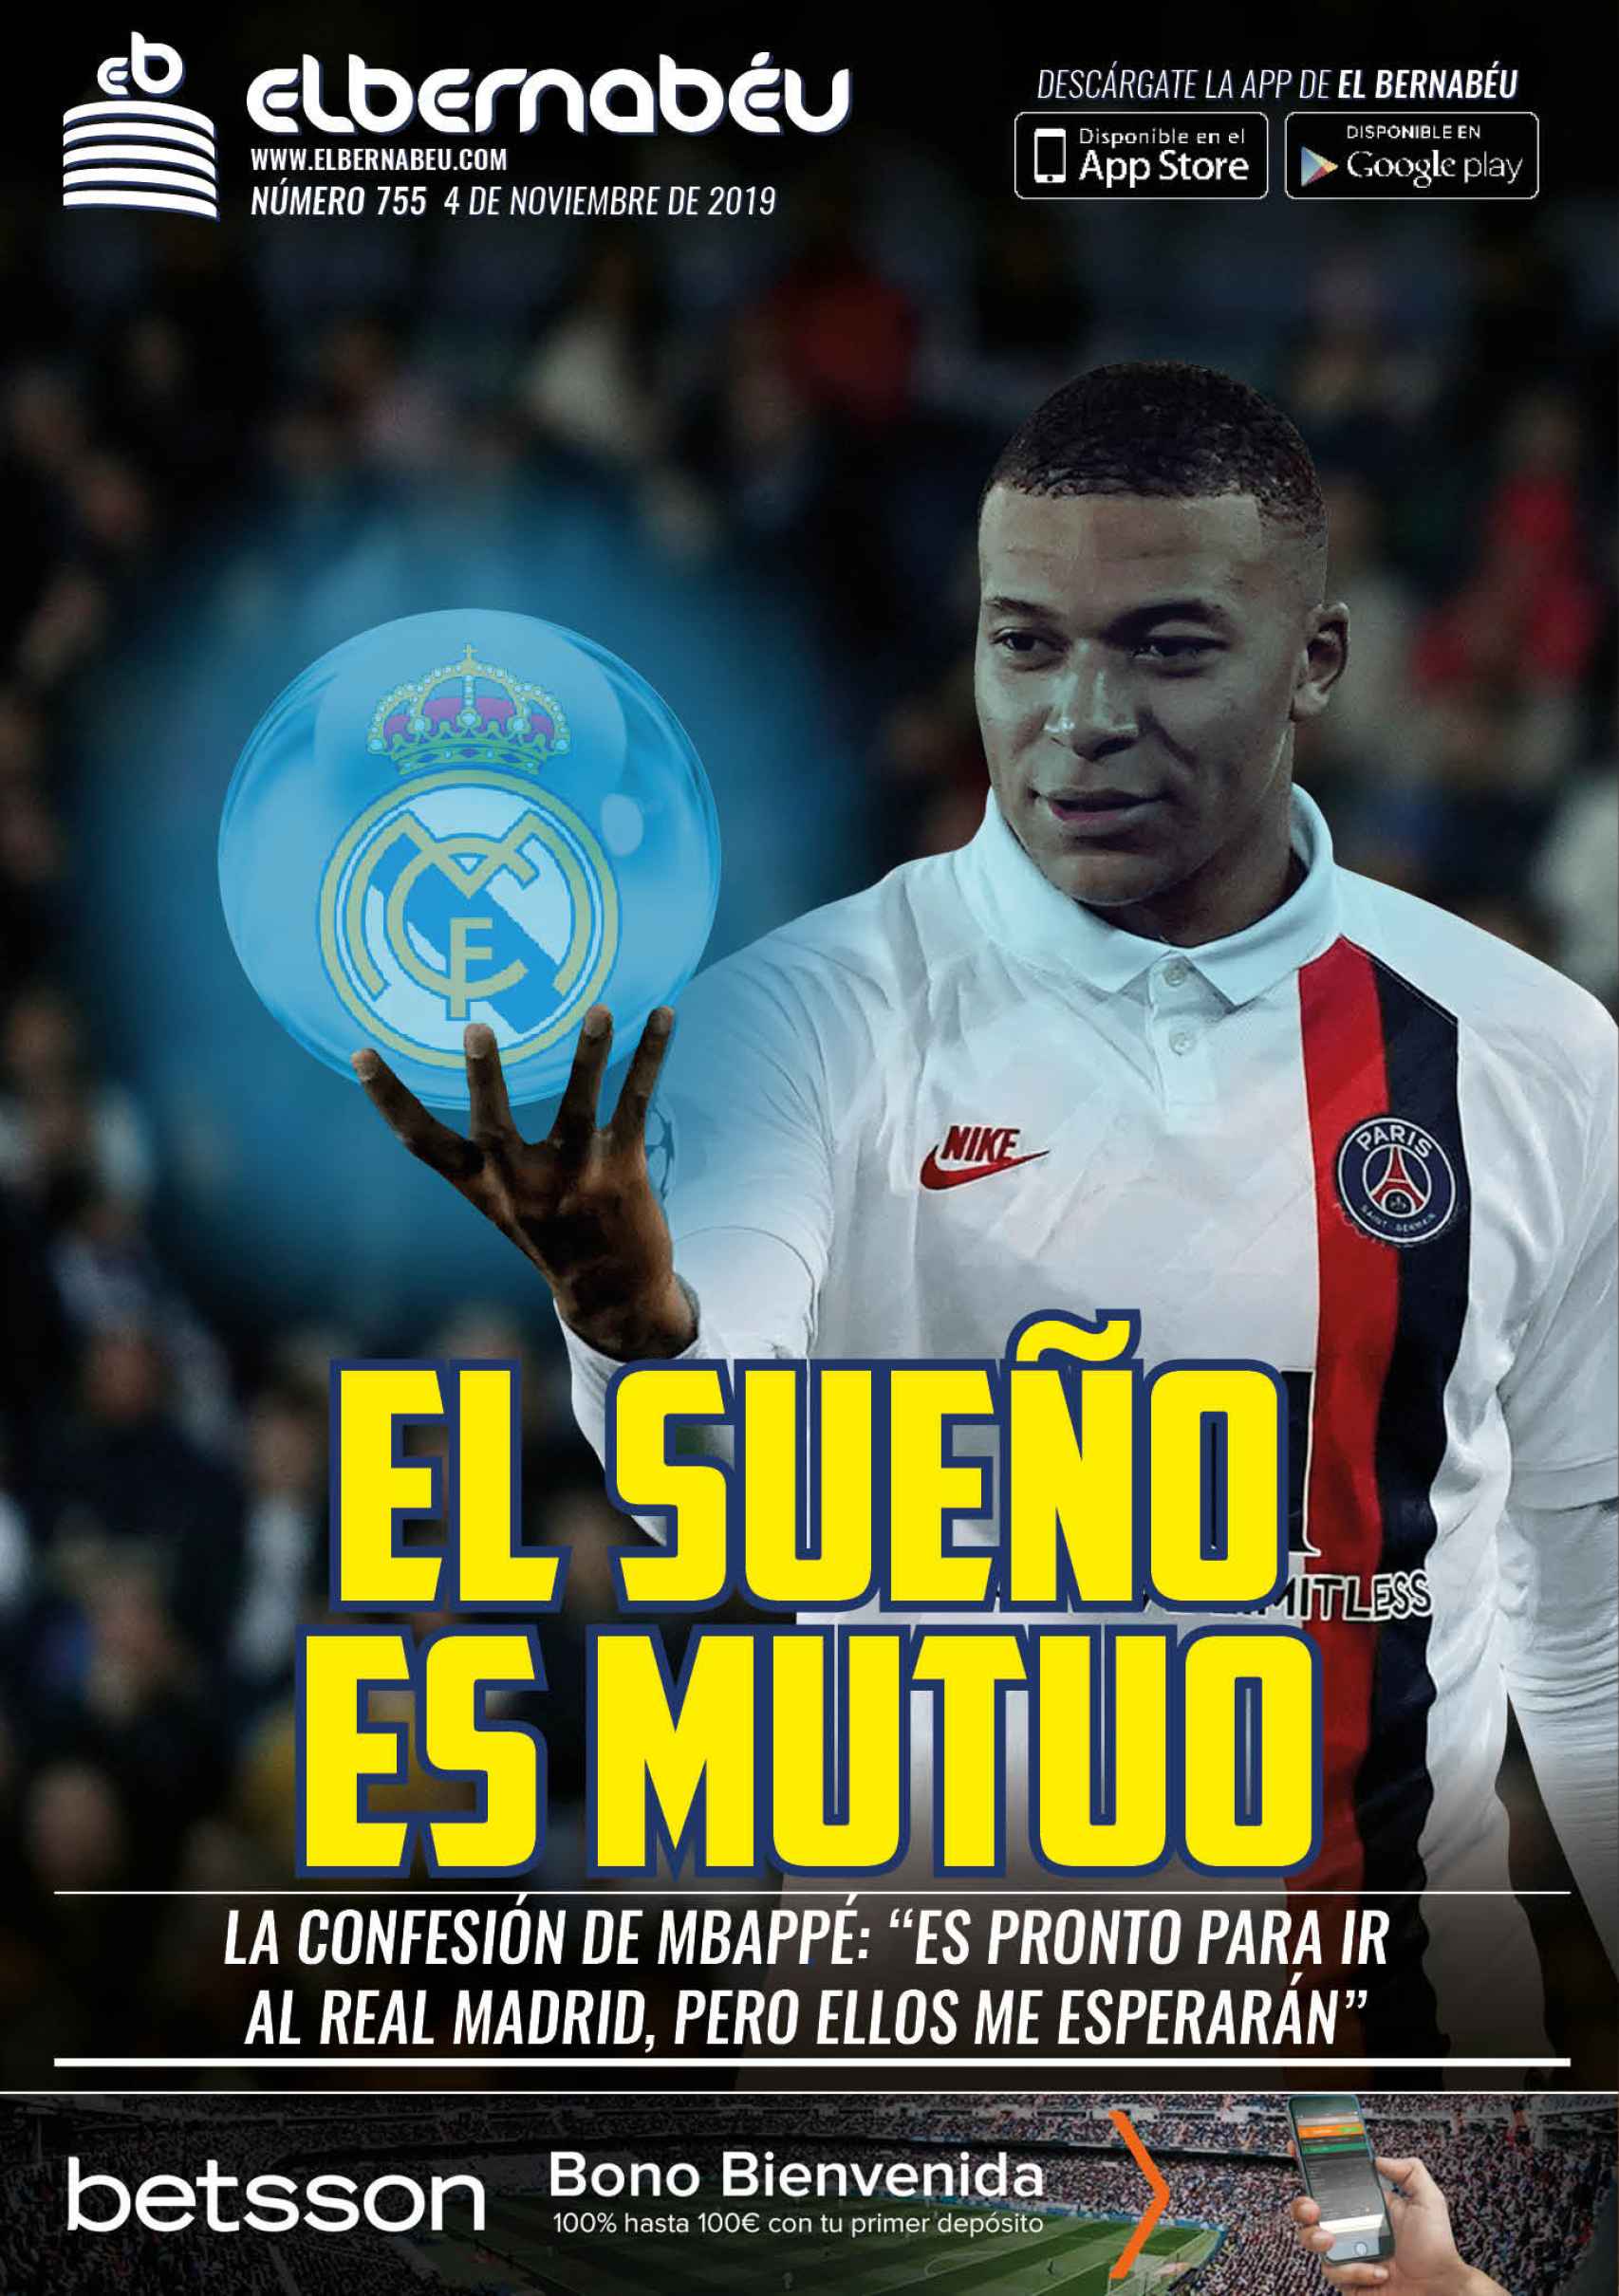 La portada de El Bernabéu (04/11/2019)